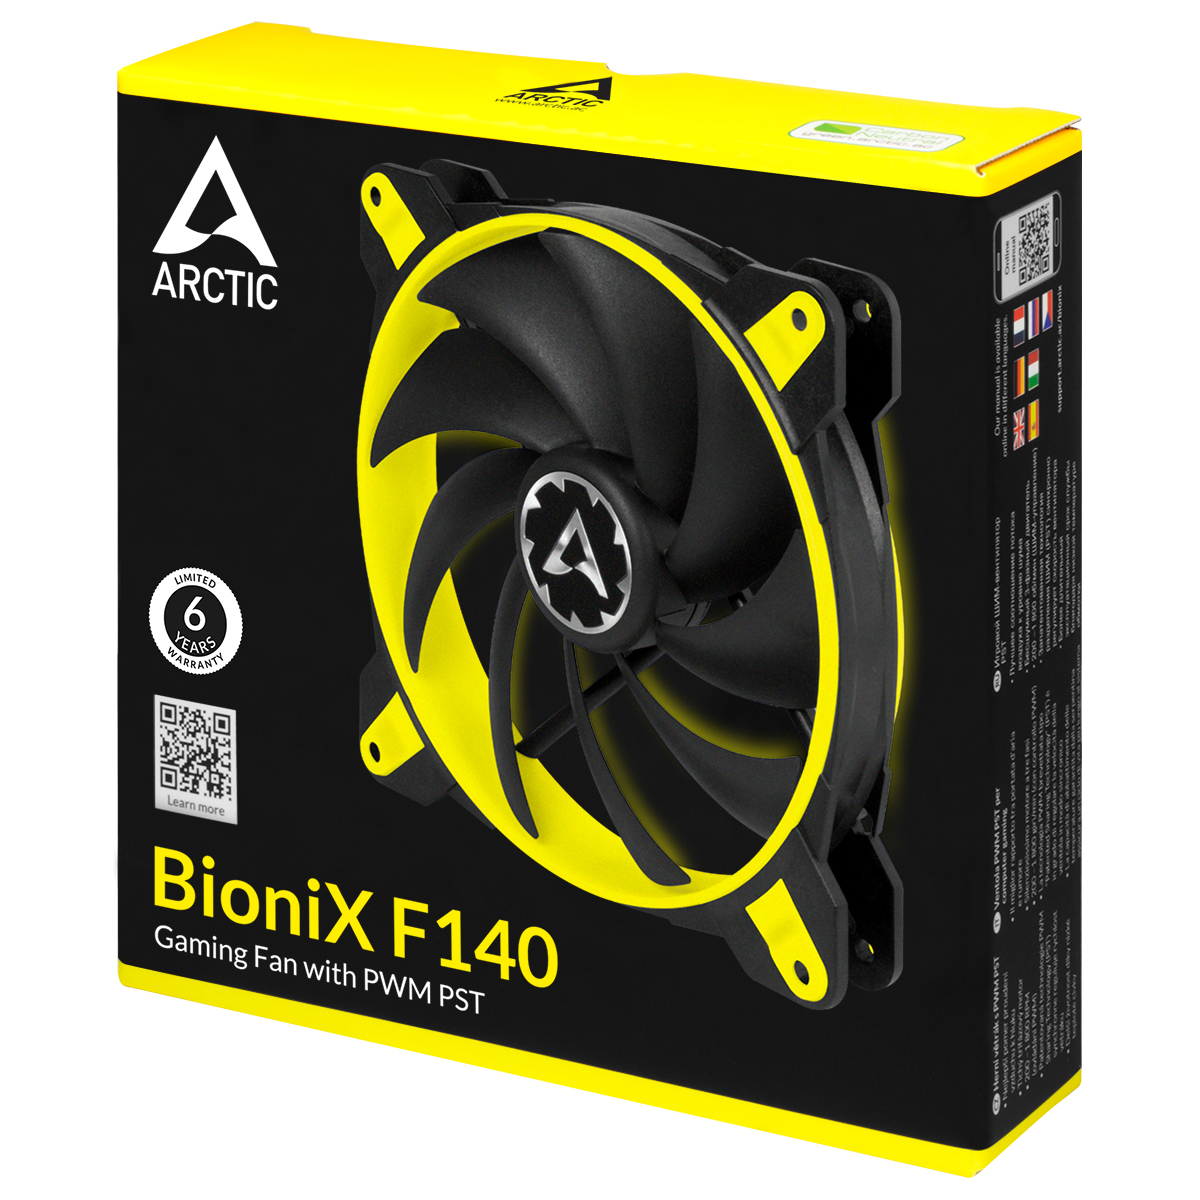 Bionix_F140_Yellow_G05